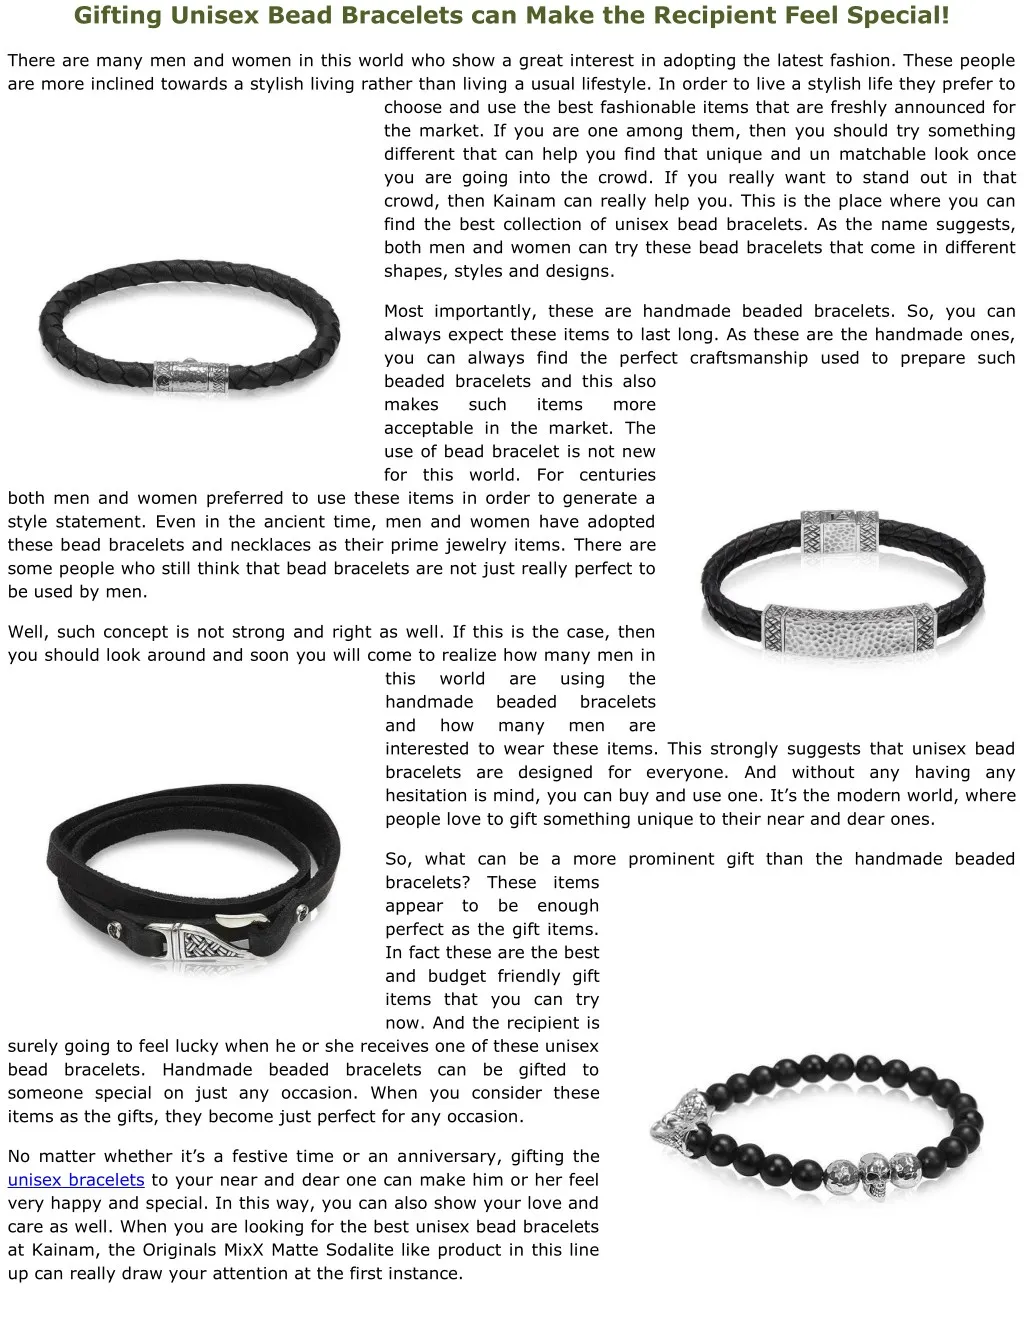 gifting unisex bead bracelets can make